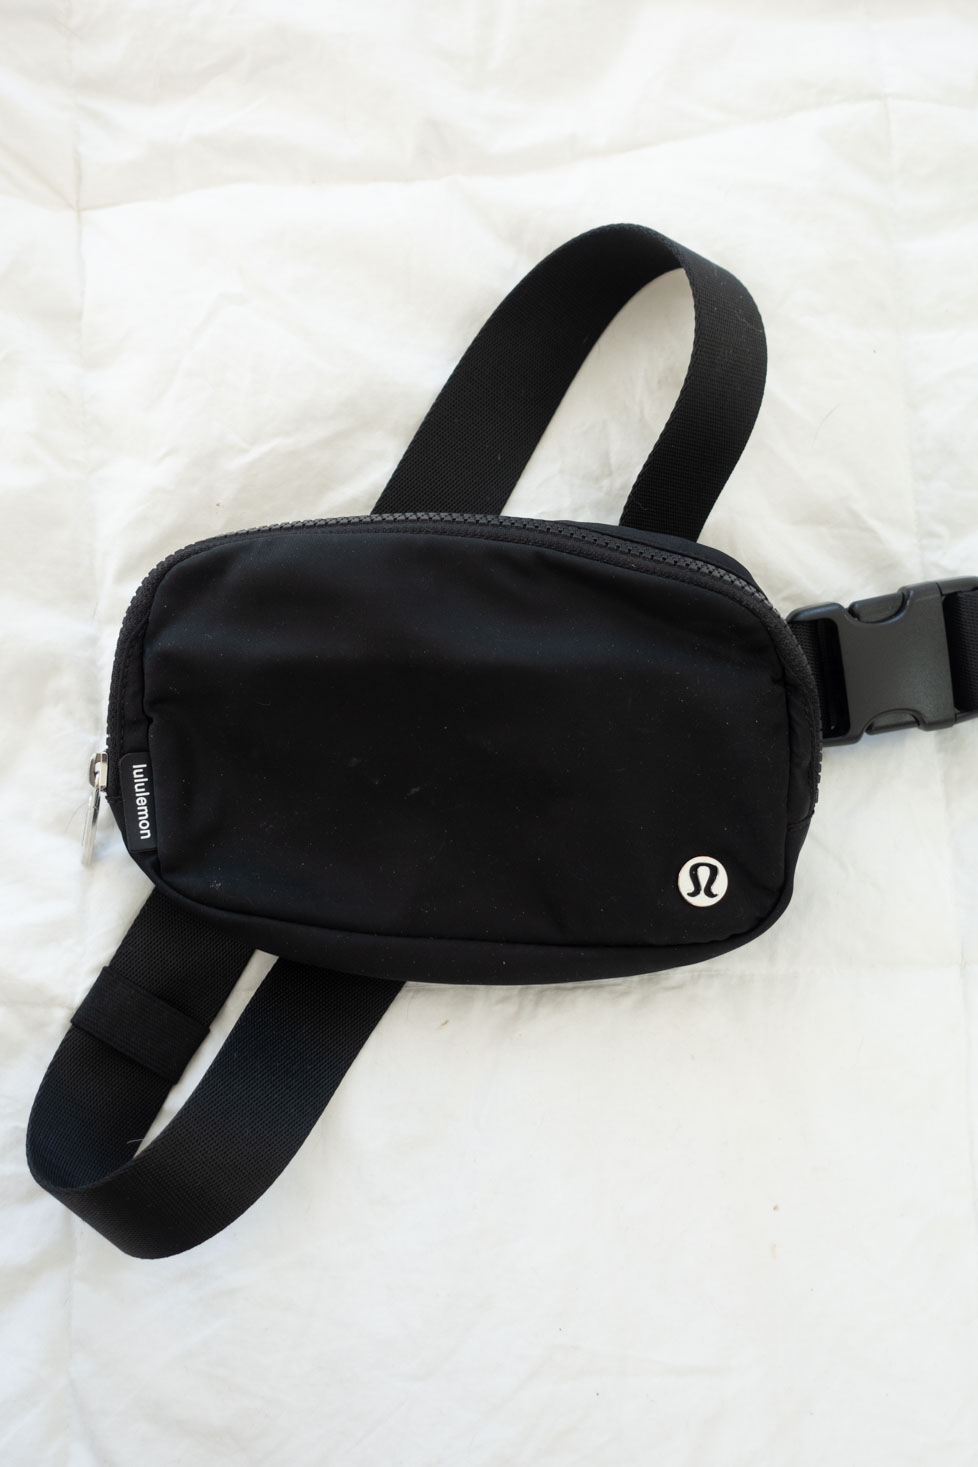 Lululemon Belt Bag - Travel Essentials for Woment